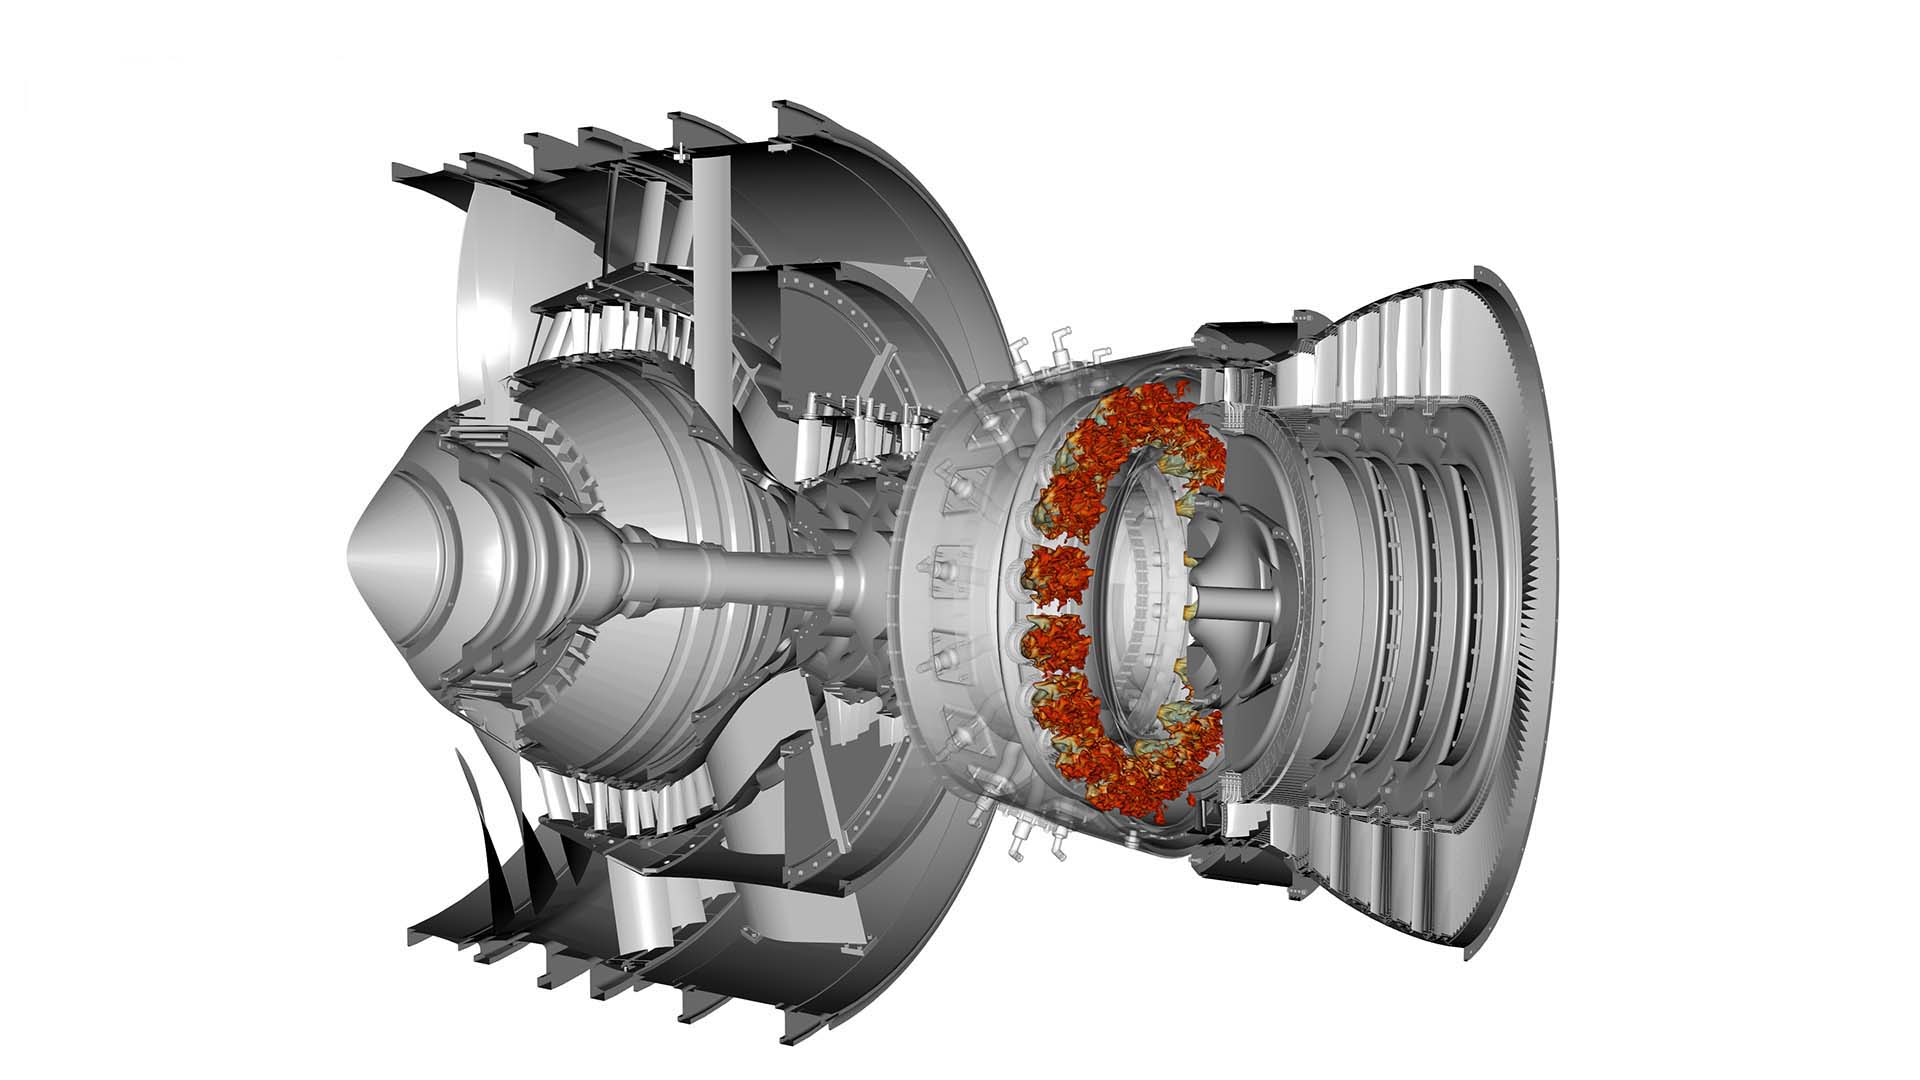 Gas turbine engine modeled in Simcenter STAR-CCM+